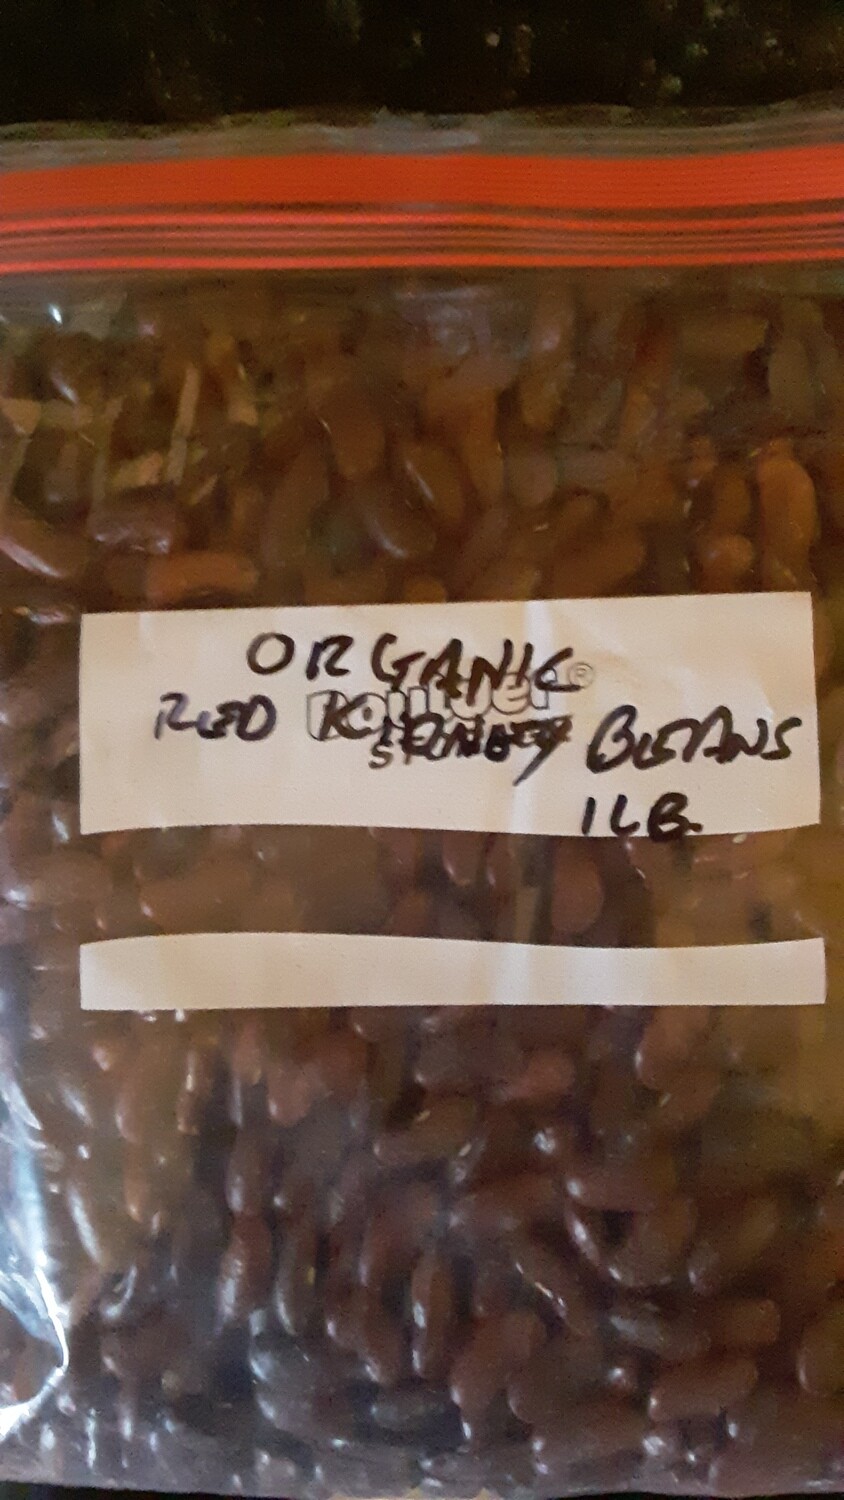 Genesee Valley Bean organic red kidney beans, 1 lb